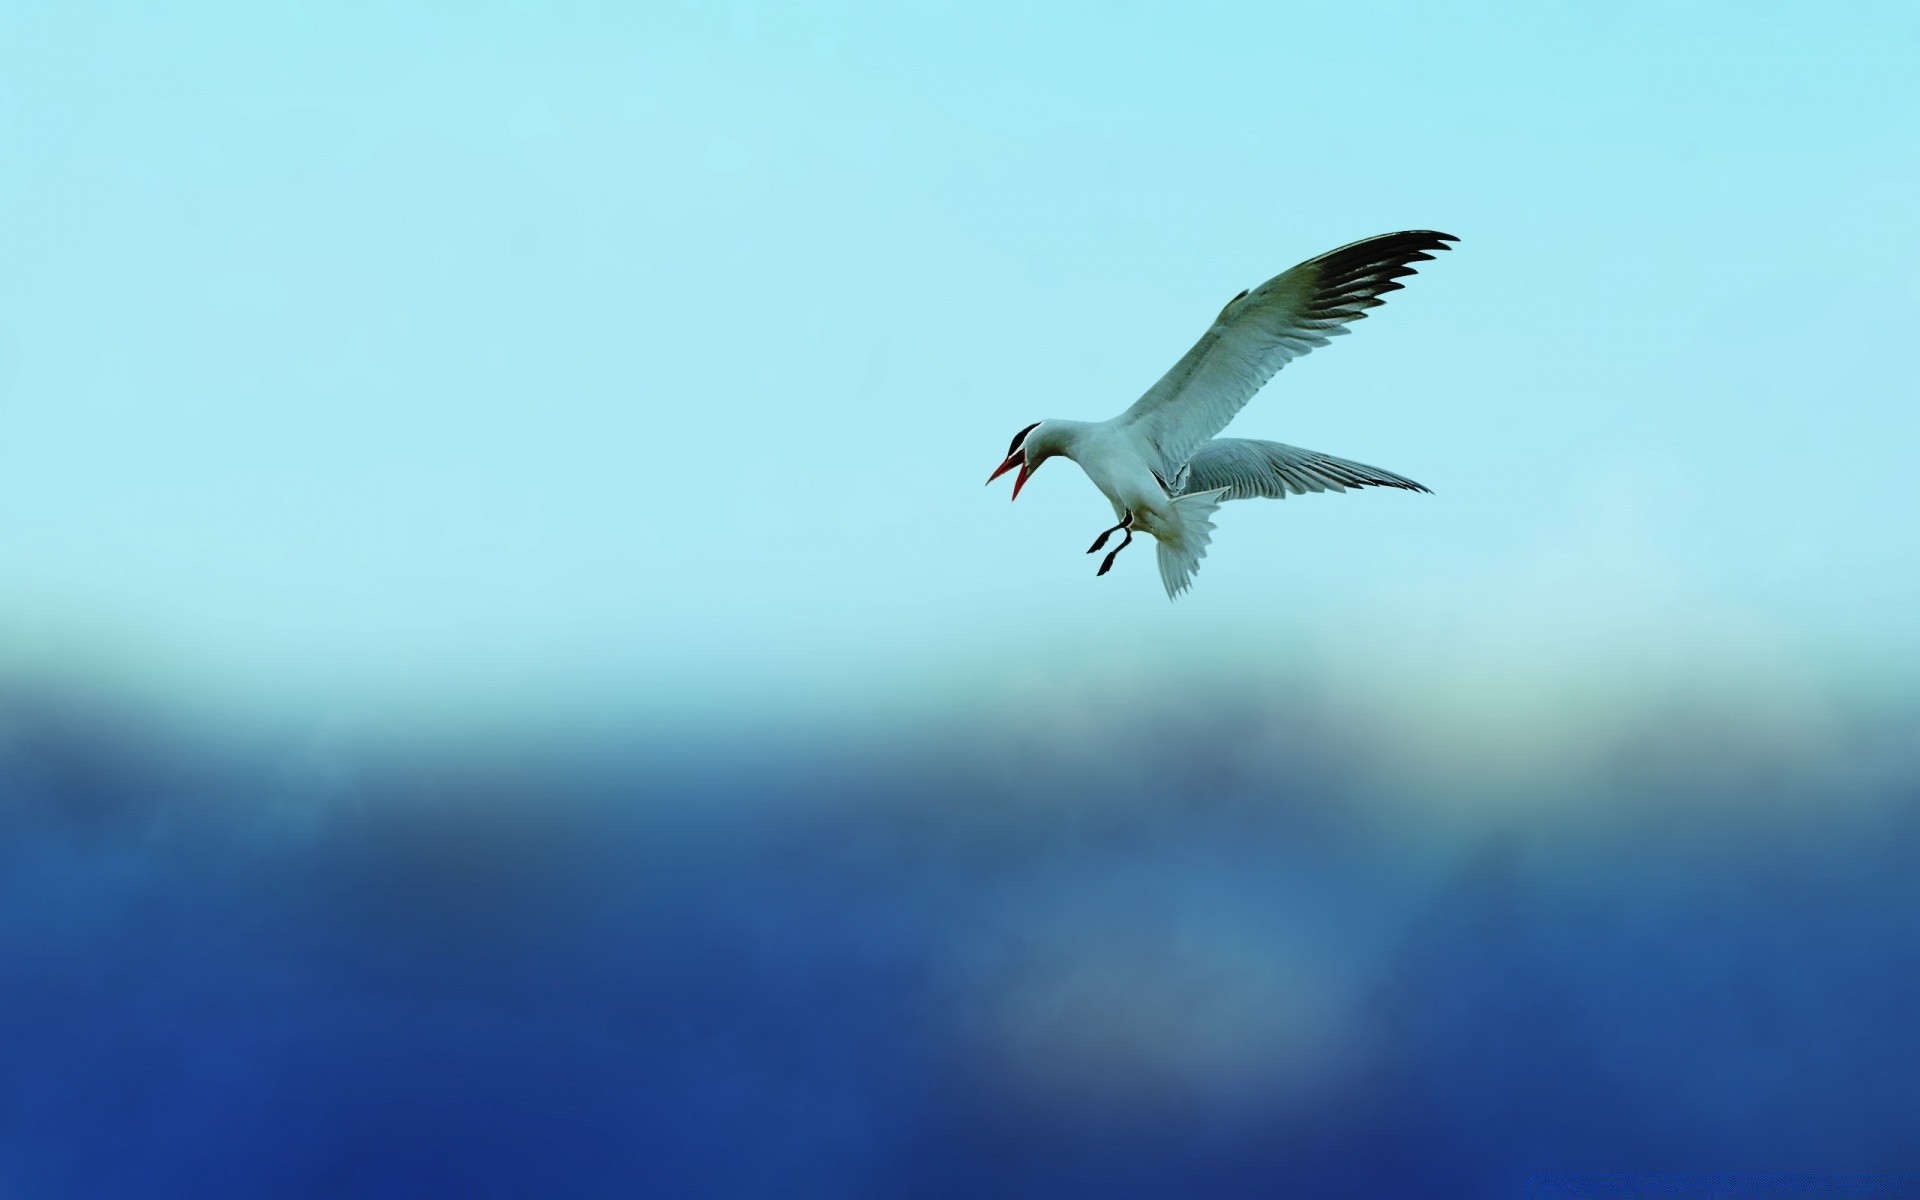 seagull bird wildlife nature seagulls outdoors sky flight water freedom fly blur